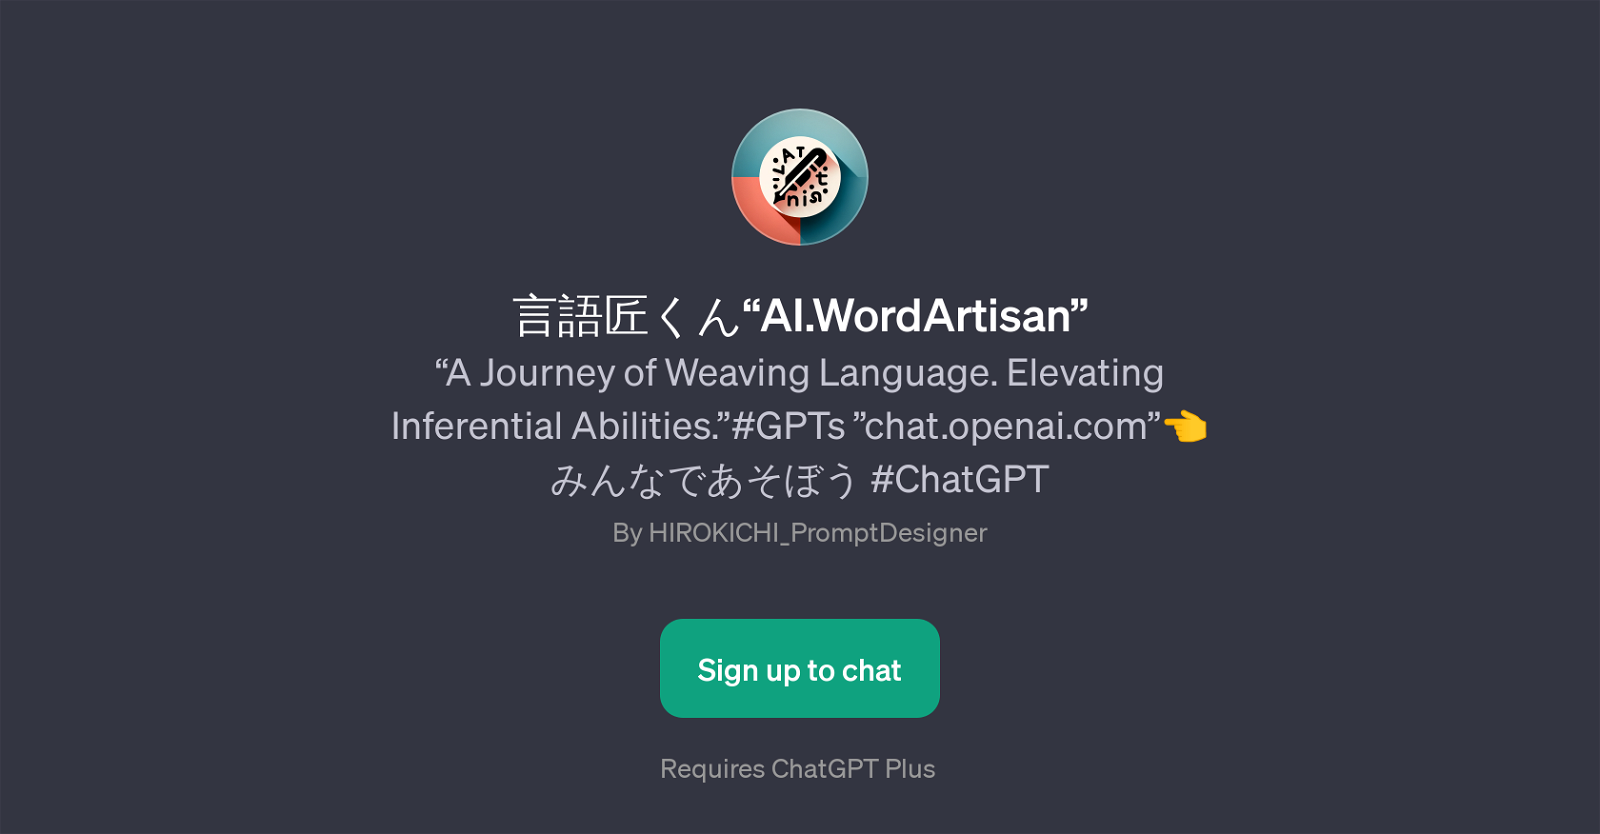 AI.WordArtisan website